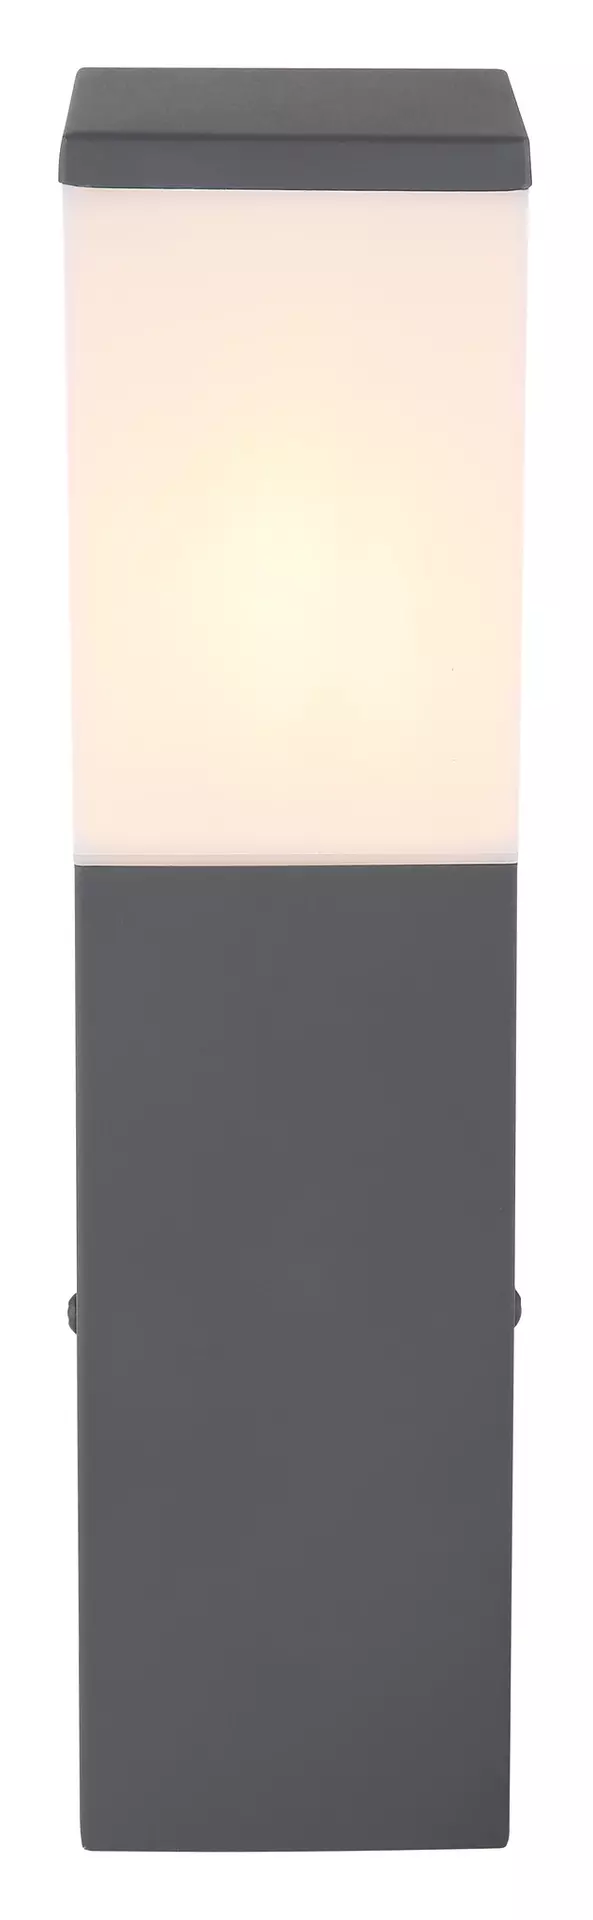 Wand-Aussenleuchte ELEGANT Globo Metall 8 x 33 x 16 cm